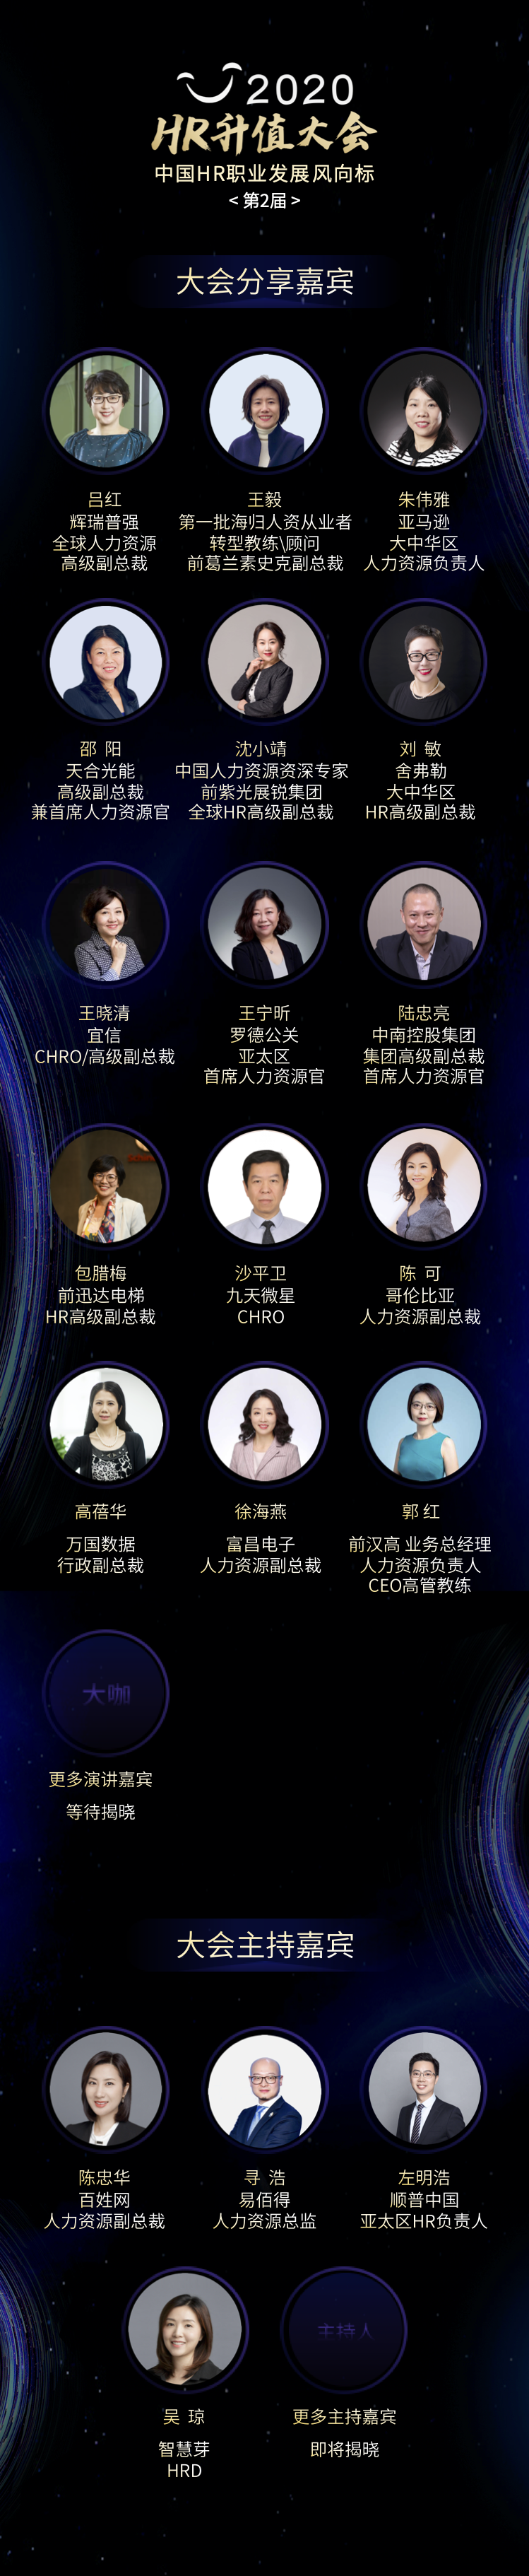 《HR升值大会》——中国HR职业发展风向标会议